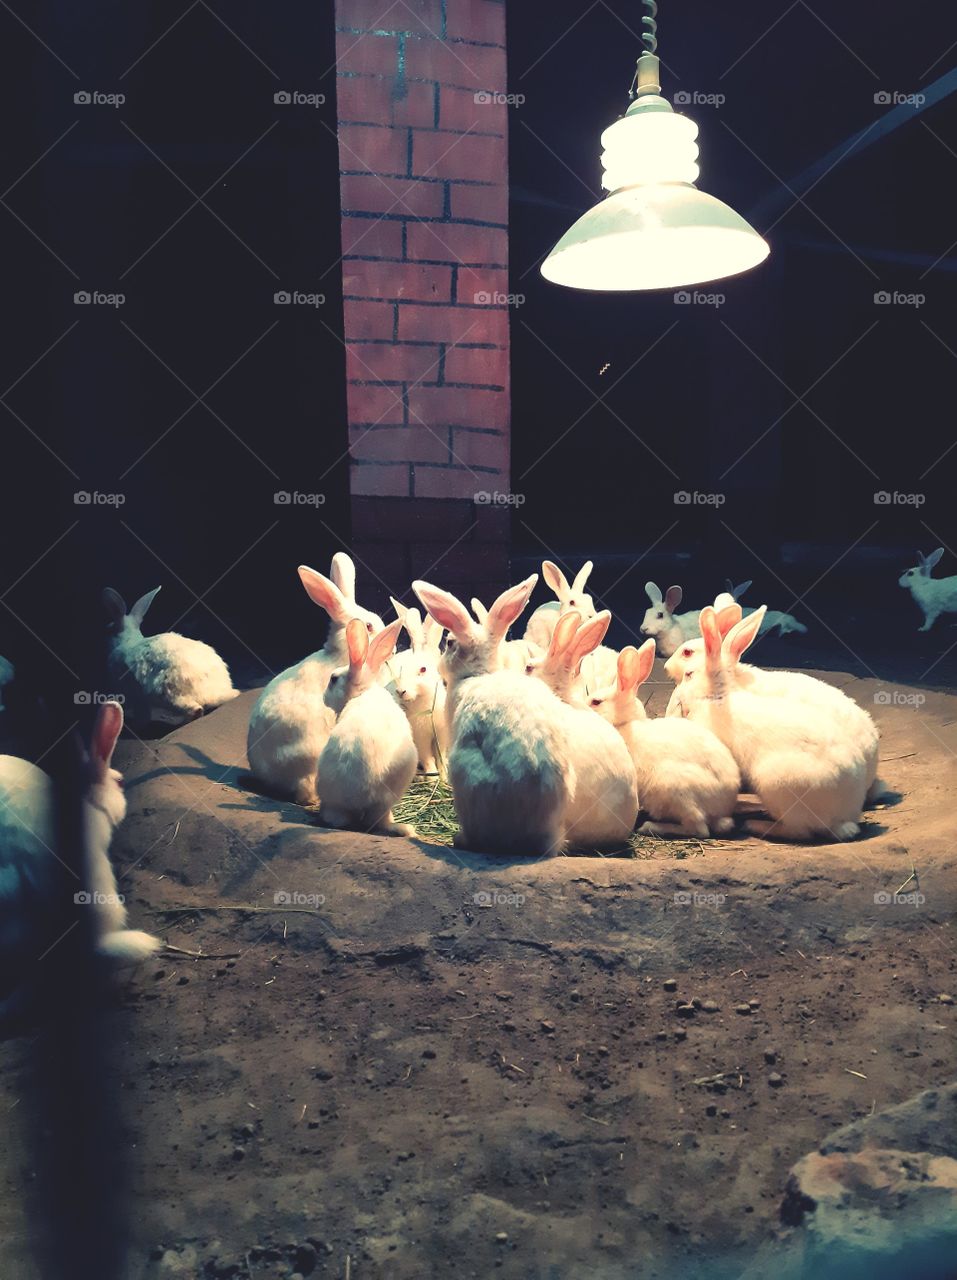 rabbits  in night farm house